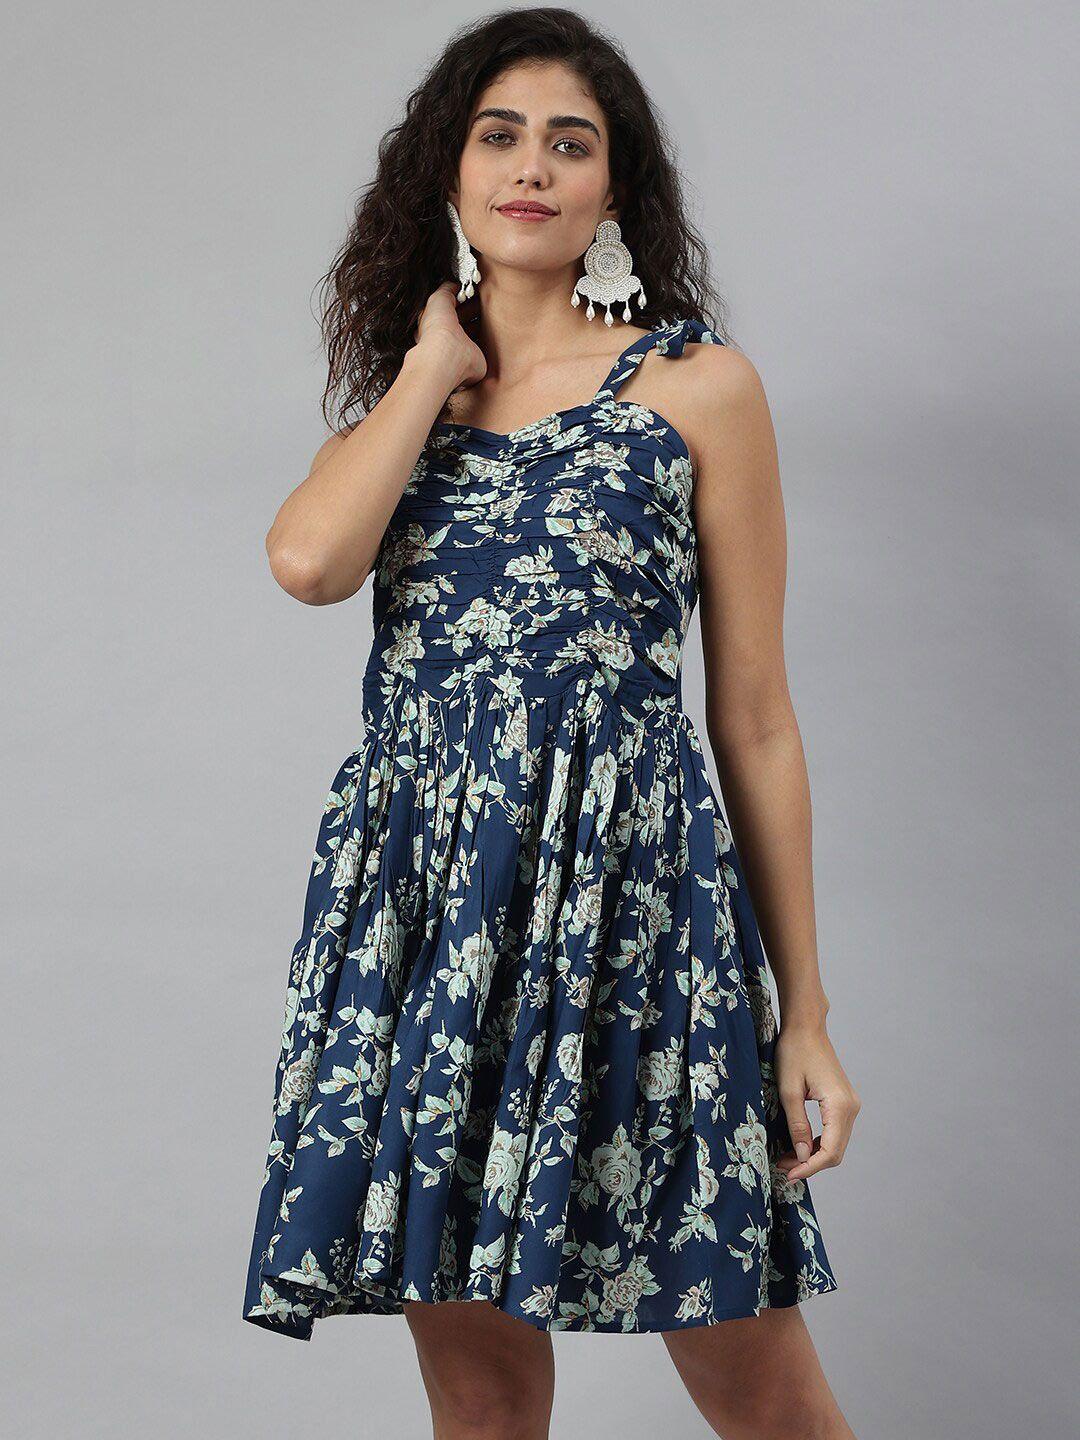 kalini-blue-floral-dress